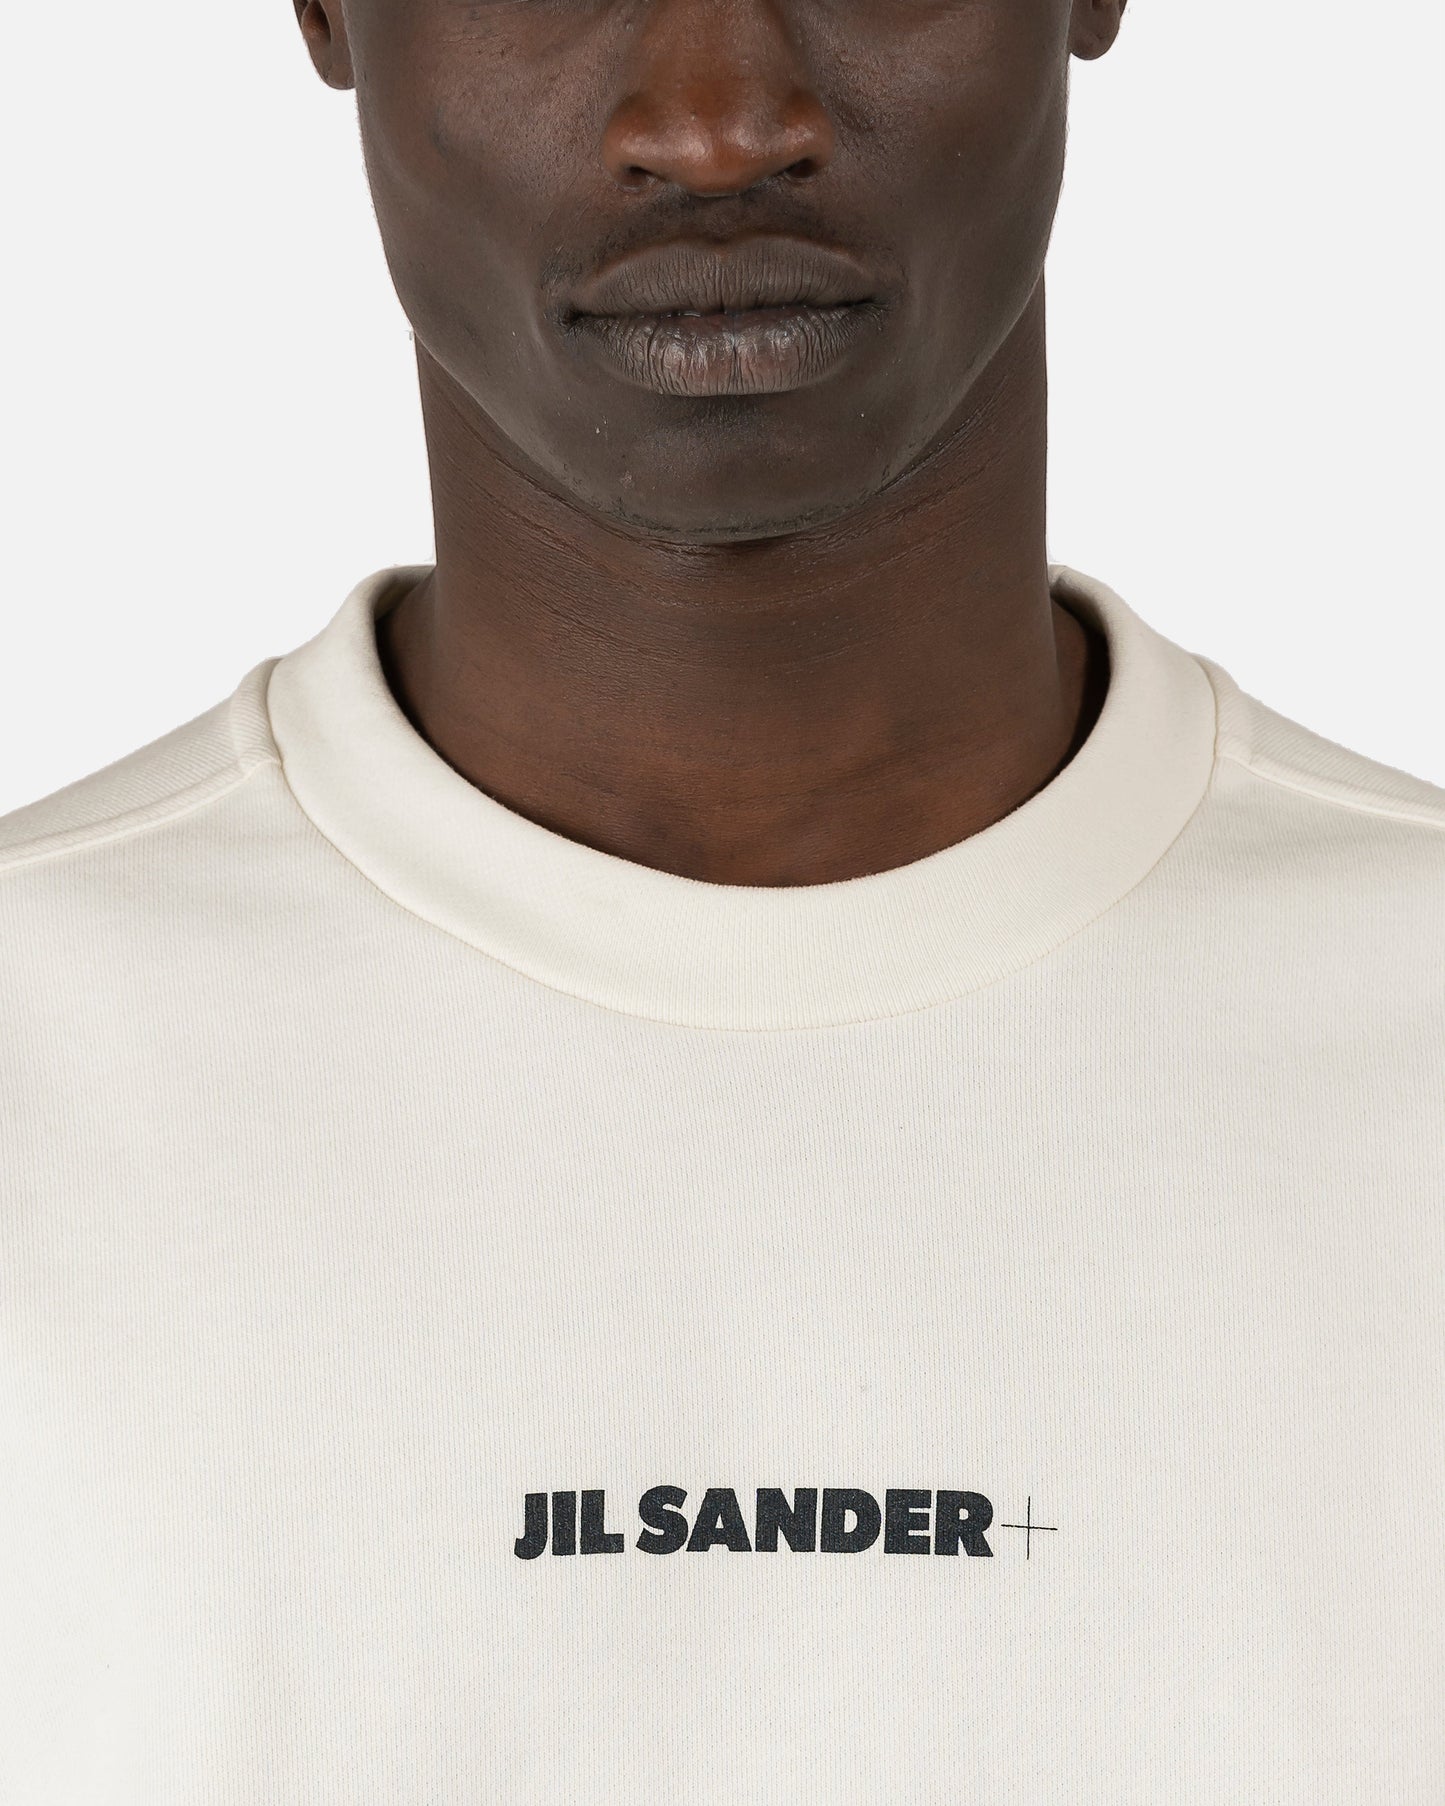 Jil Sander Men's Sweatshirts Logo Sweatshirt in Natural